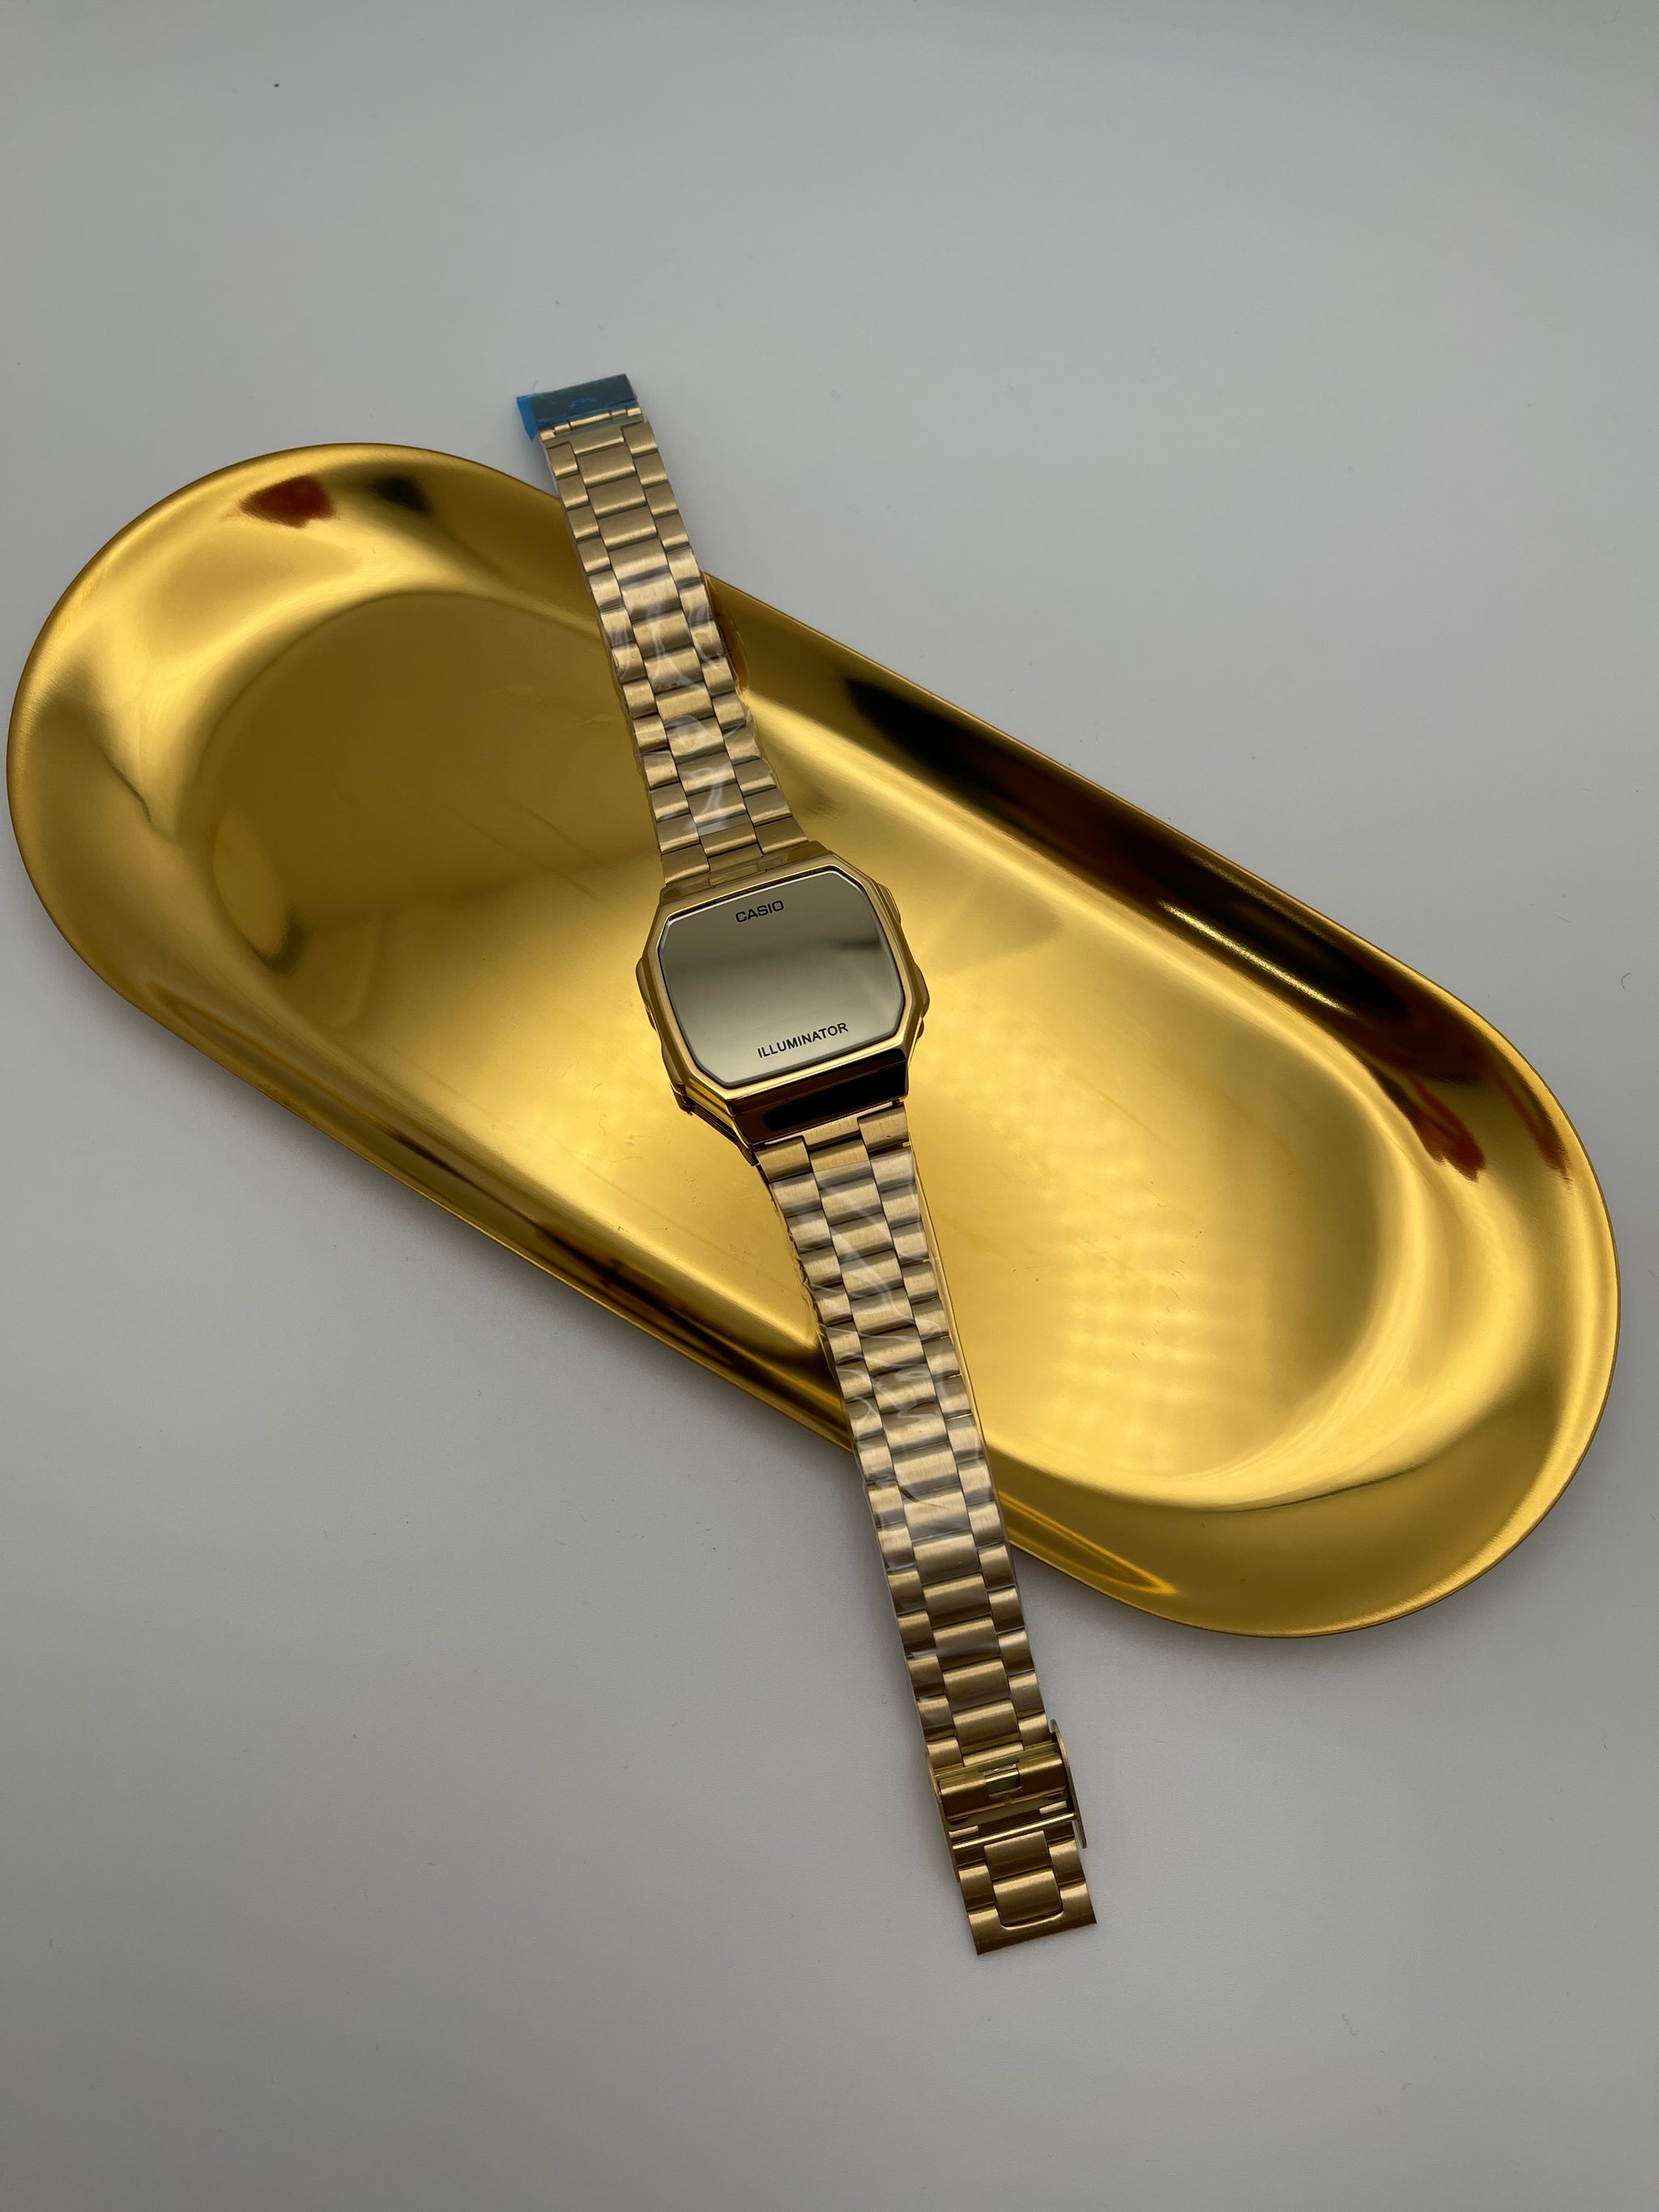 Casio Watch (gold face)m